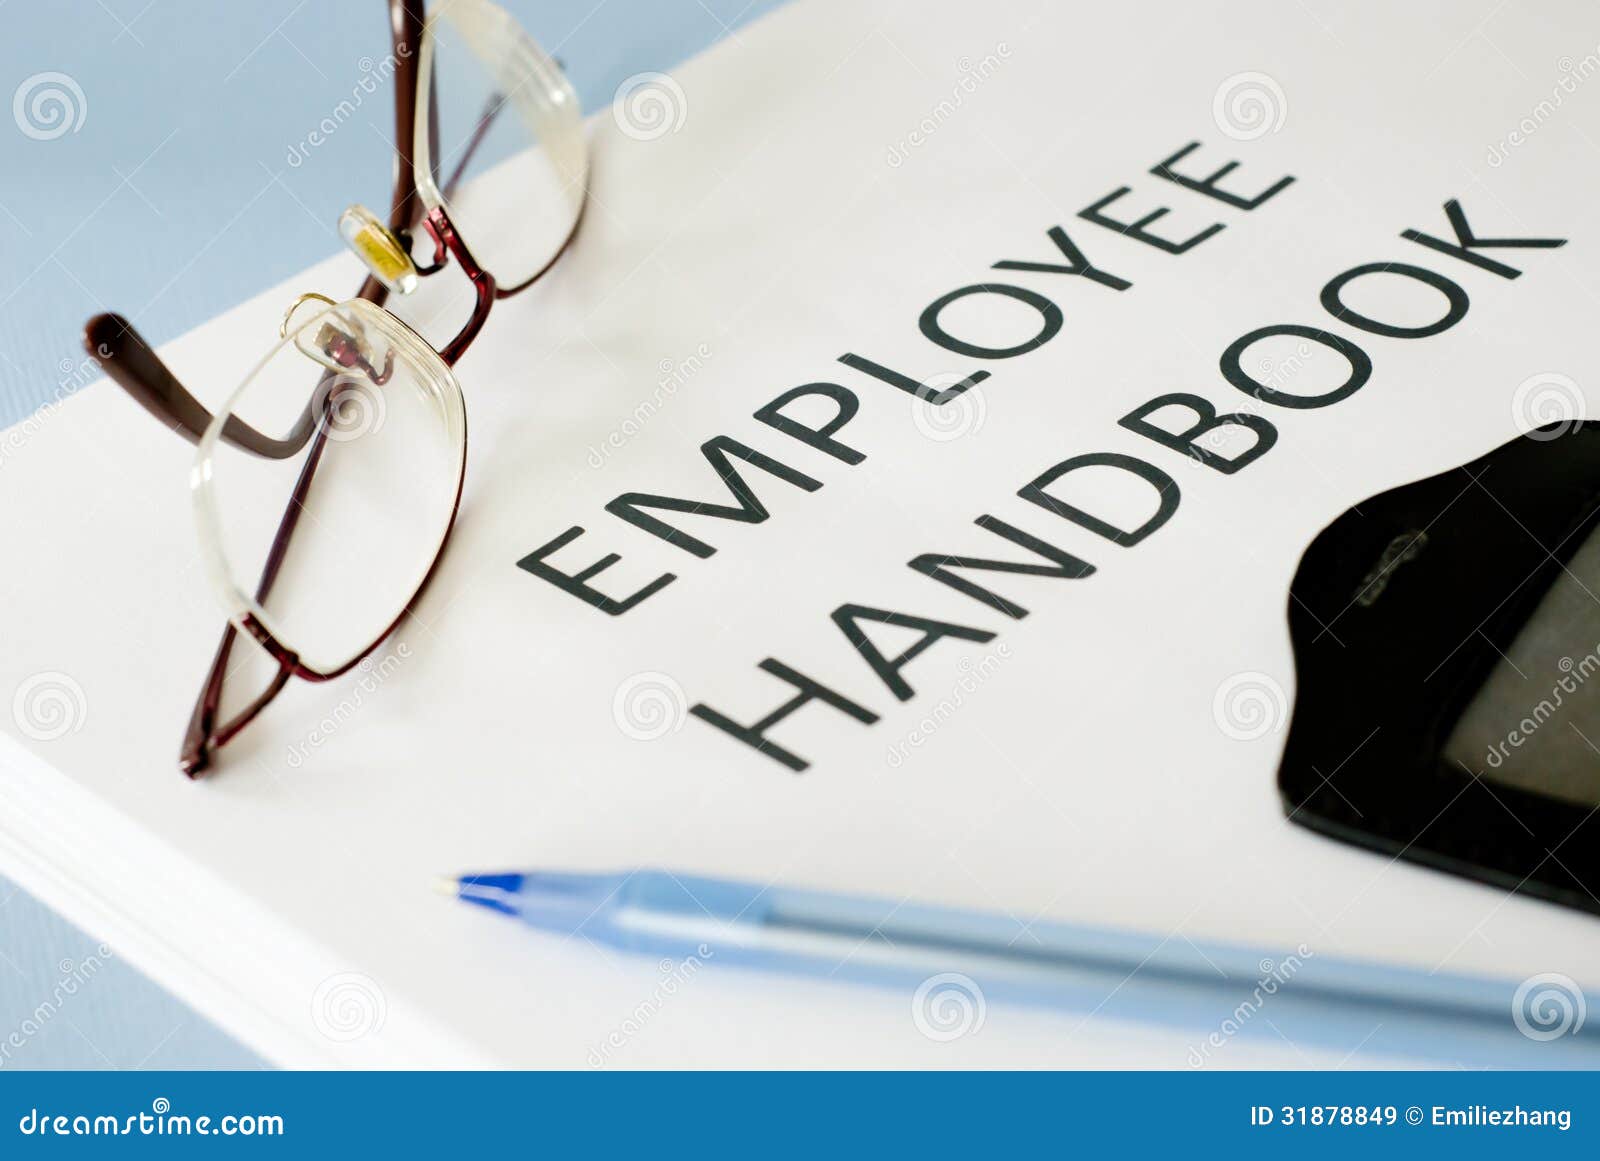 free clipart employee handbook - photo #5